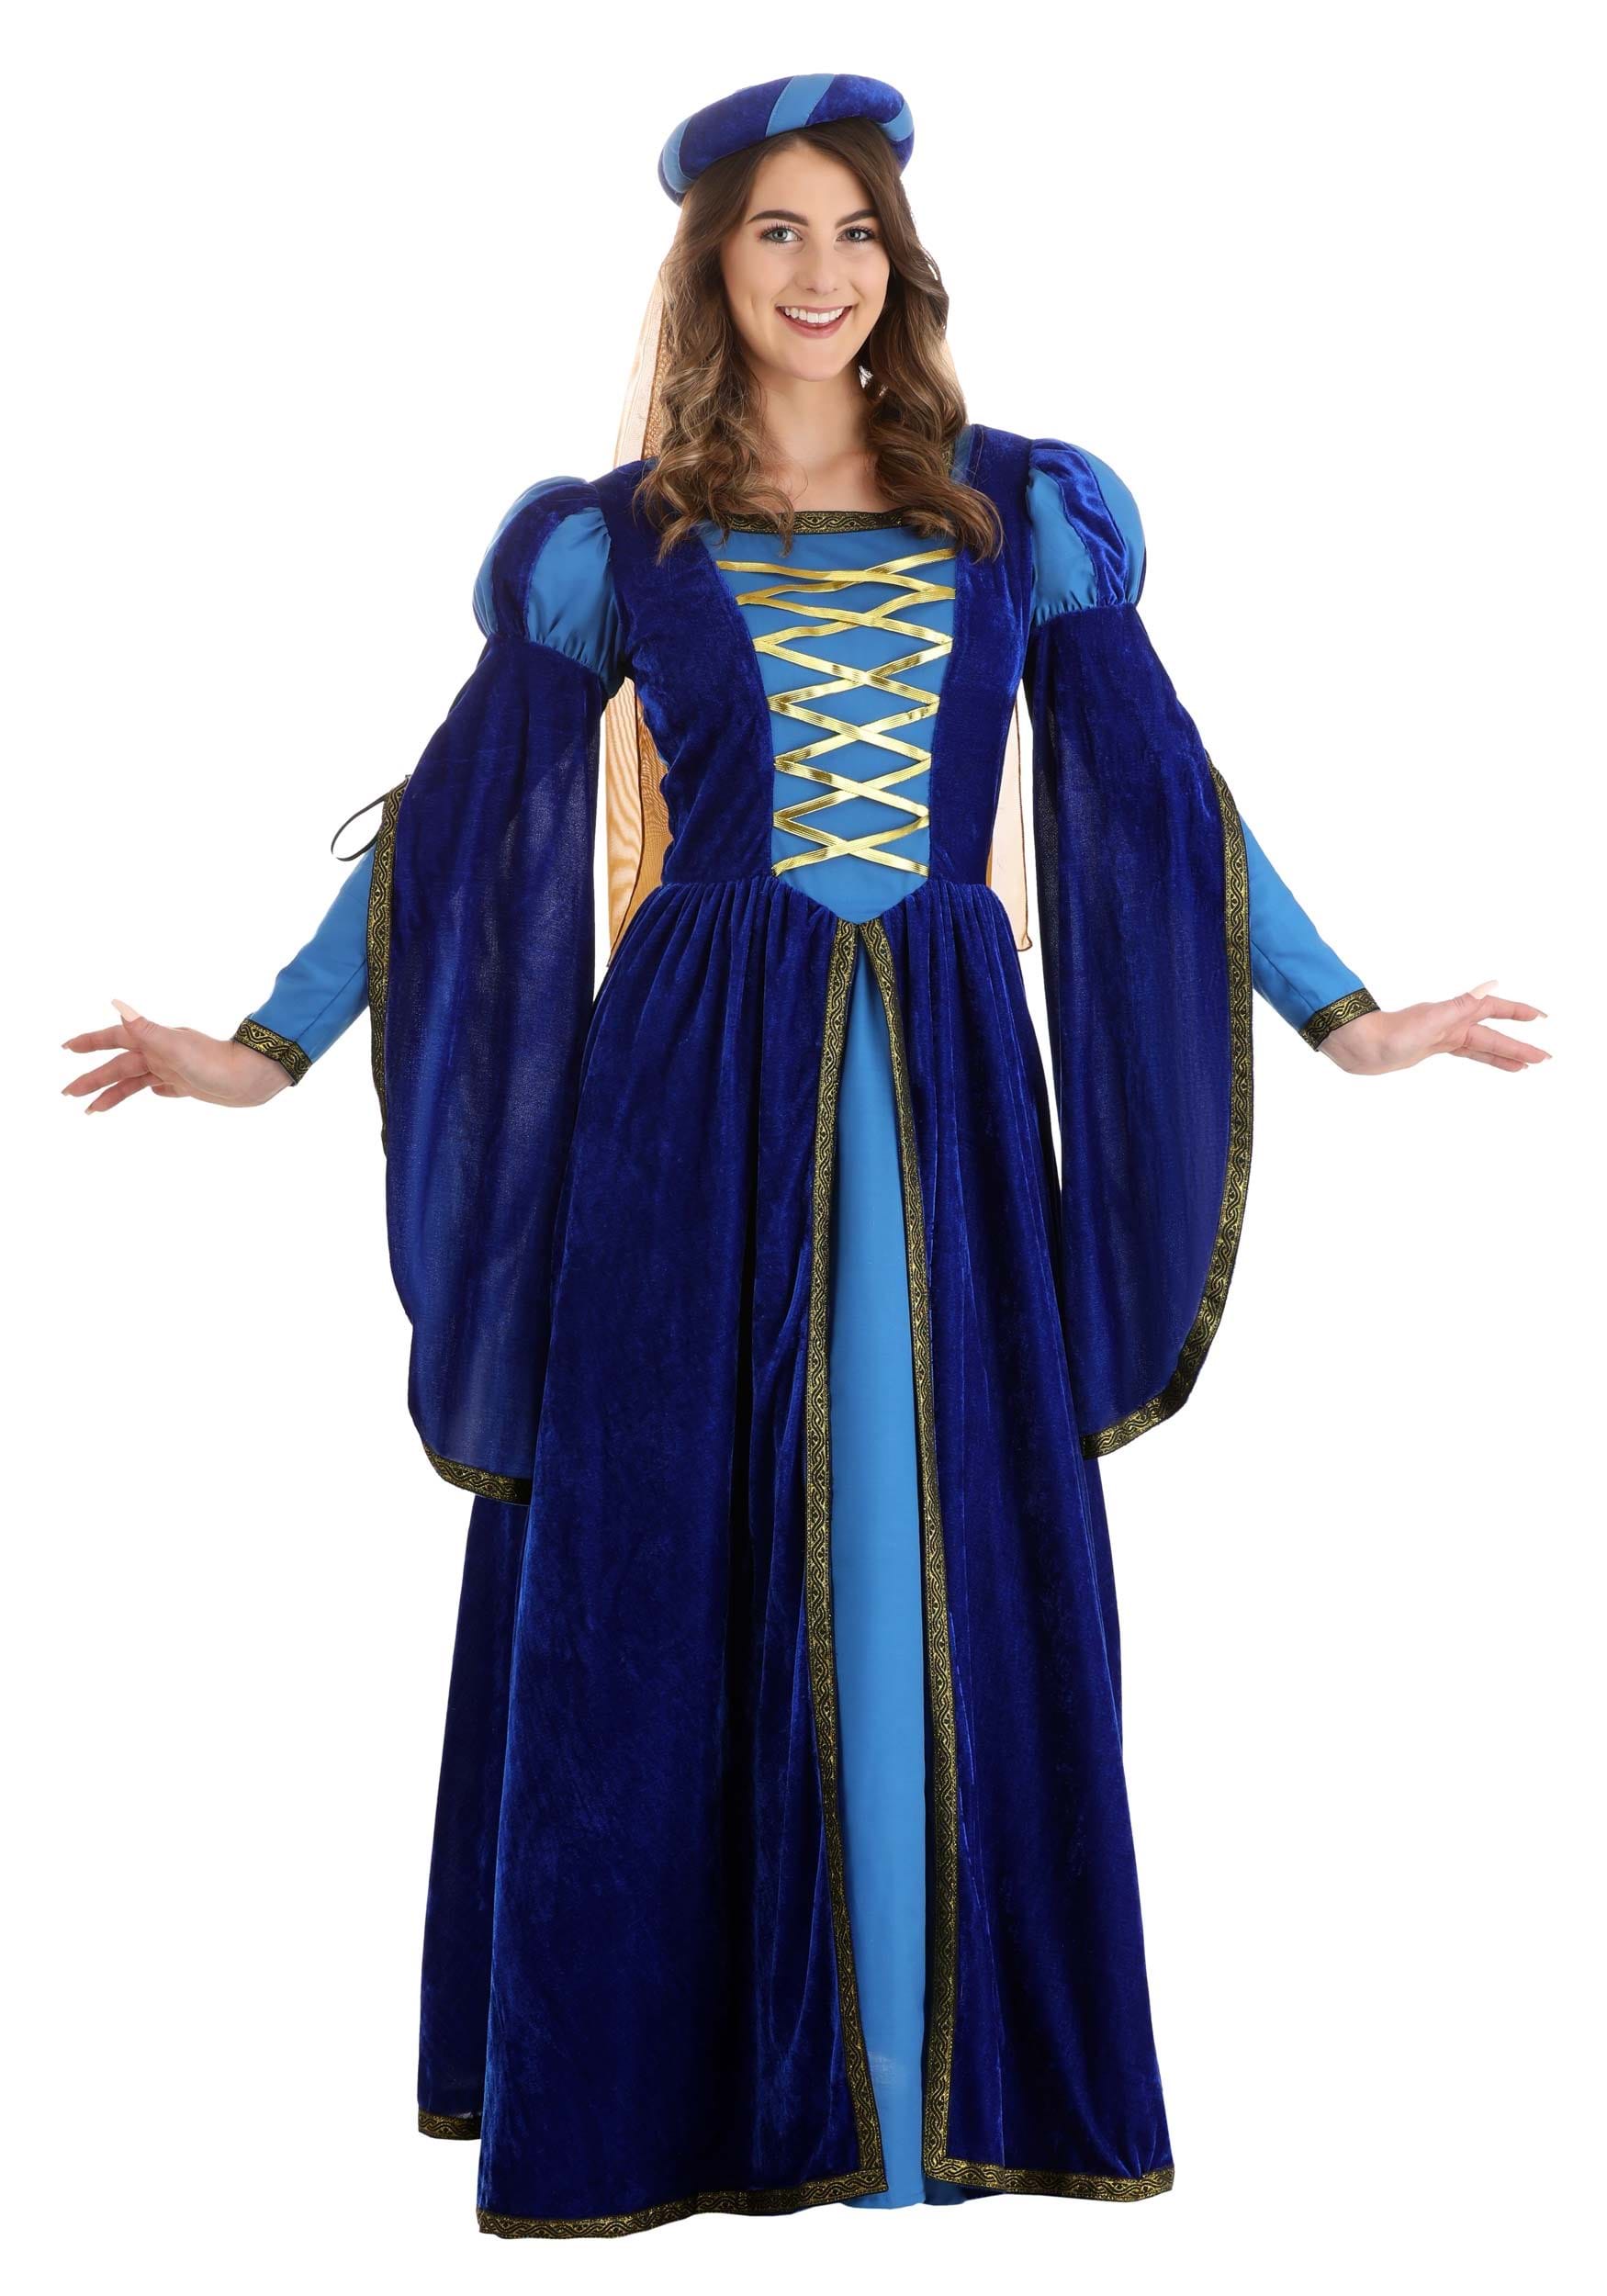 Photos - Fancy Dress FUN Costumes Renaissance Queen Costume for Women | Renaissance Costumes Or